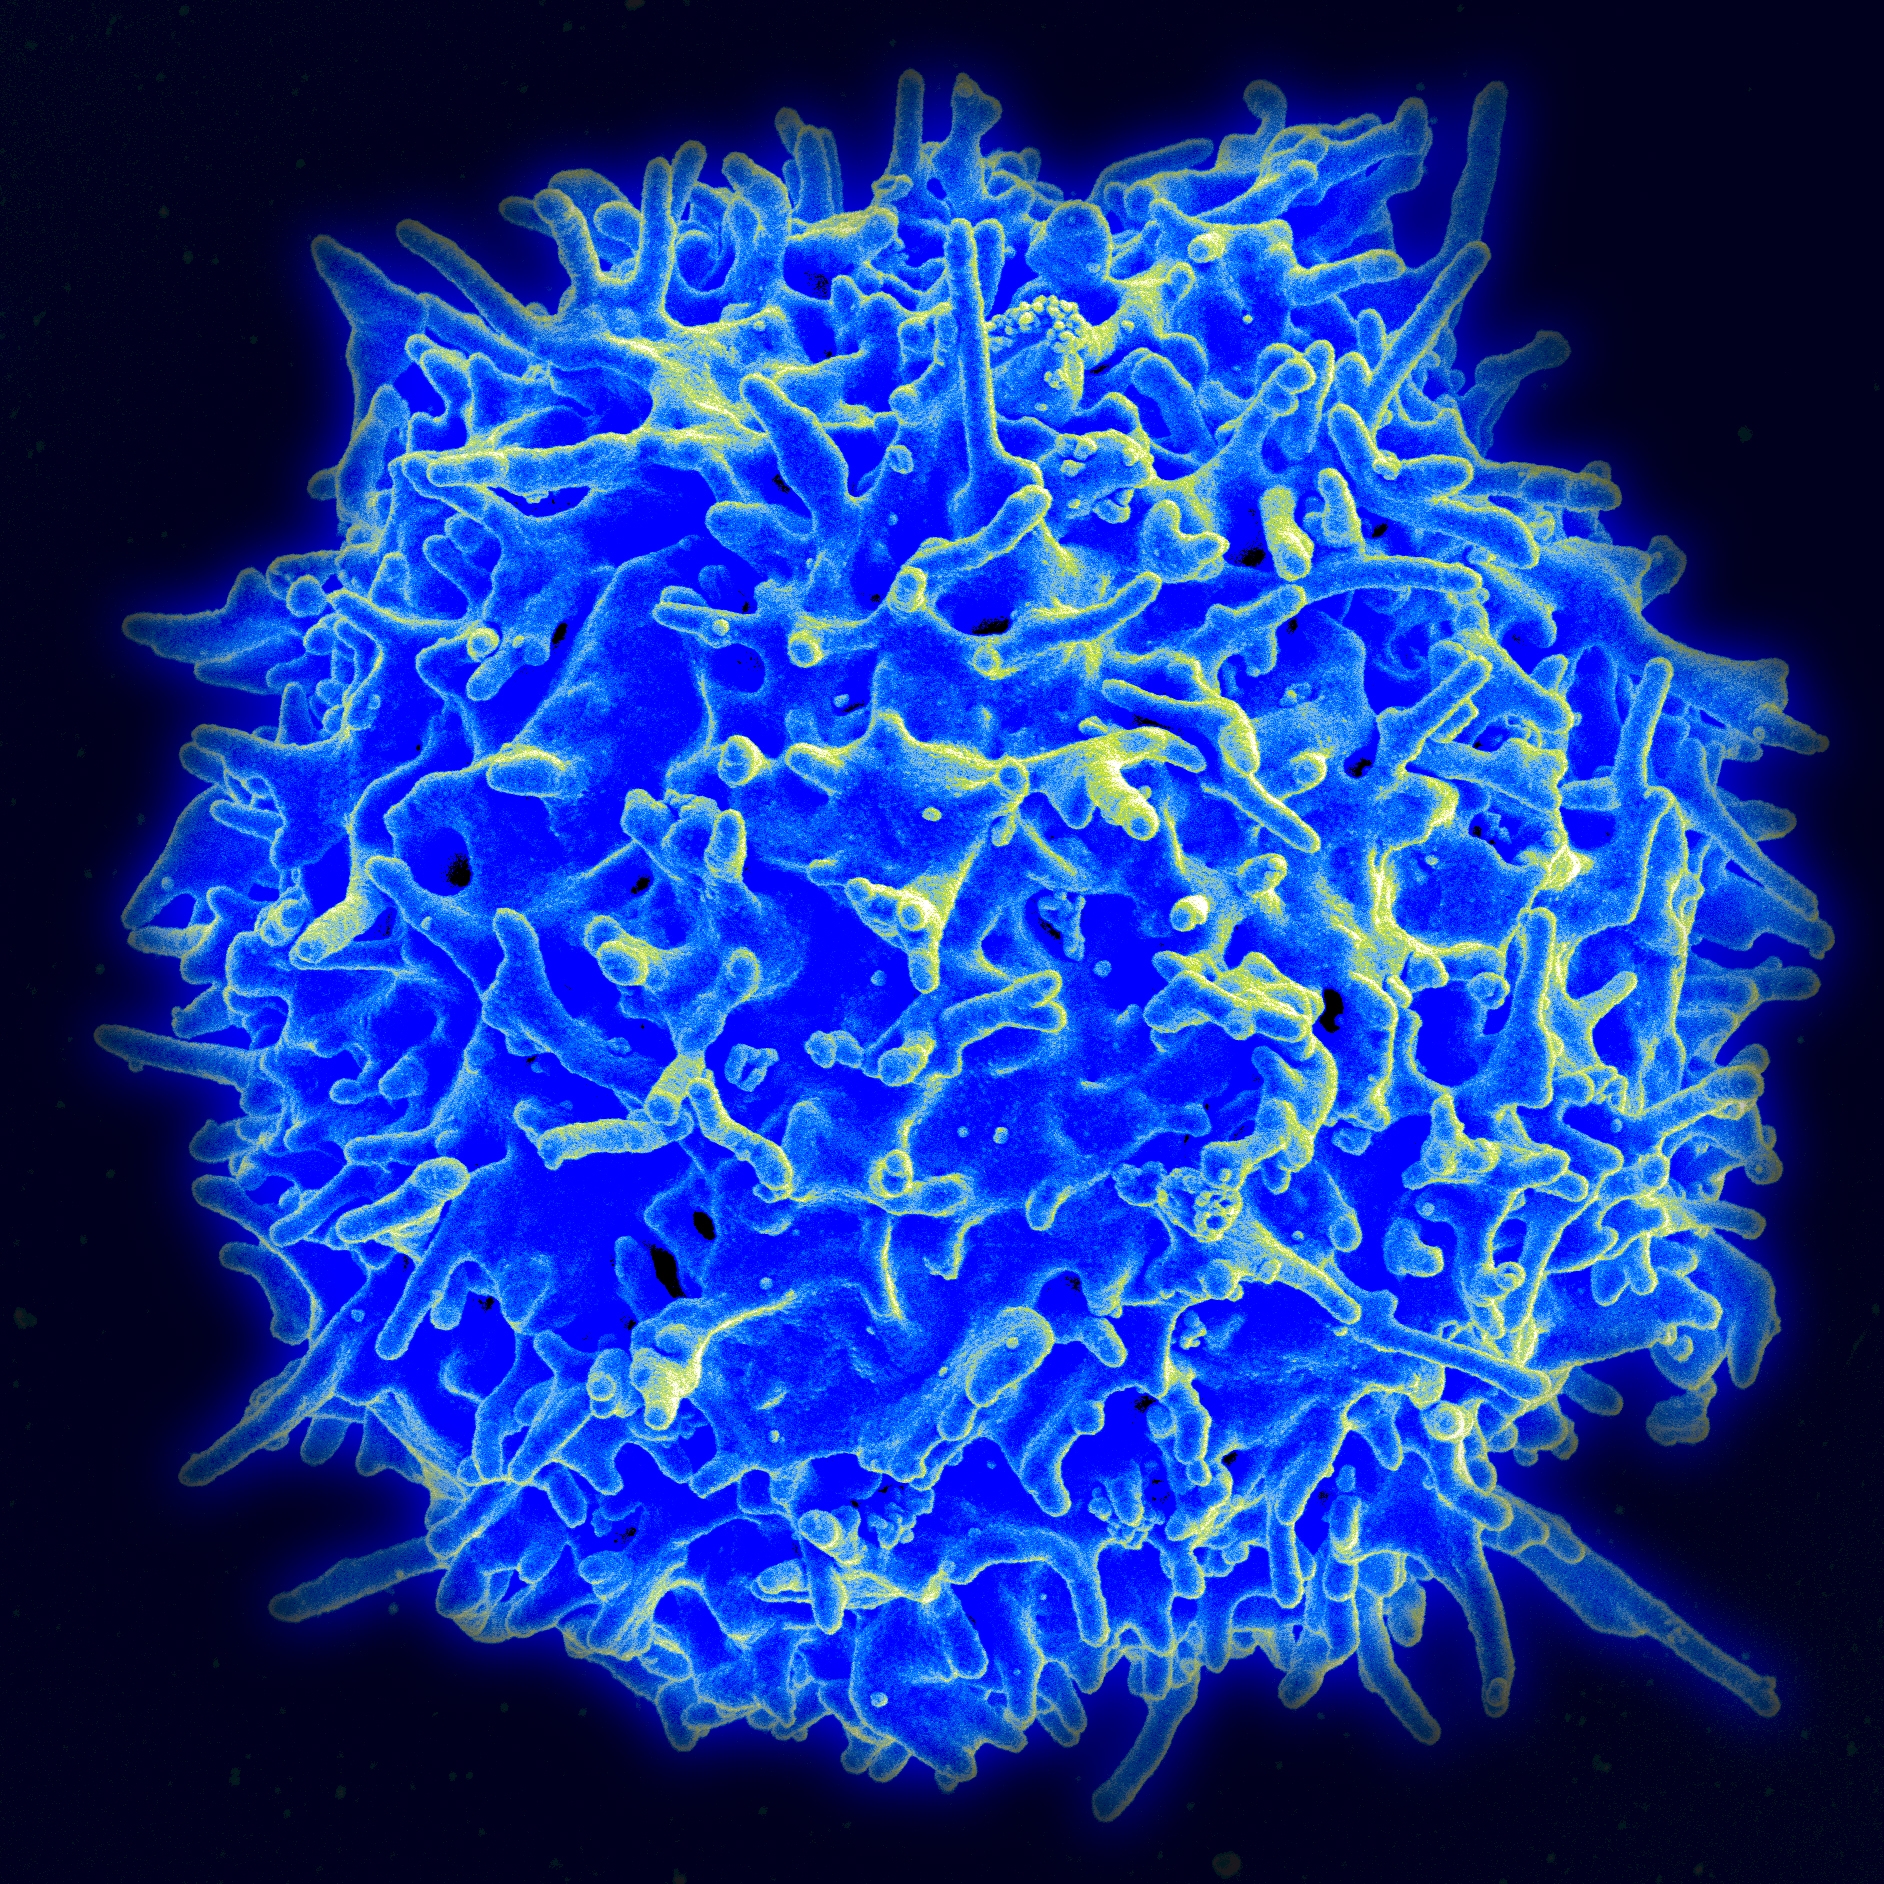 Micrografía de un linfocito T (o célula T) humano del sistema inmune de un donador sano. Imagen: NIAID/NIH. Fuente: NIAID Flickr's photostream.